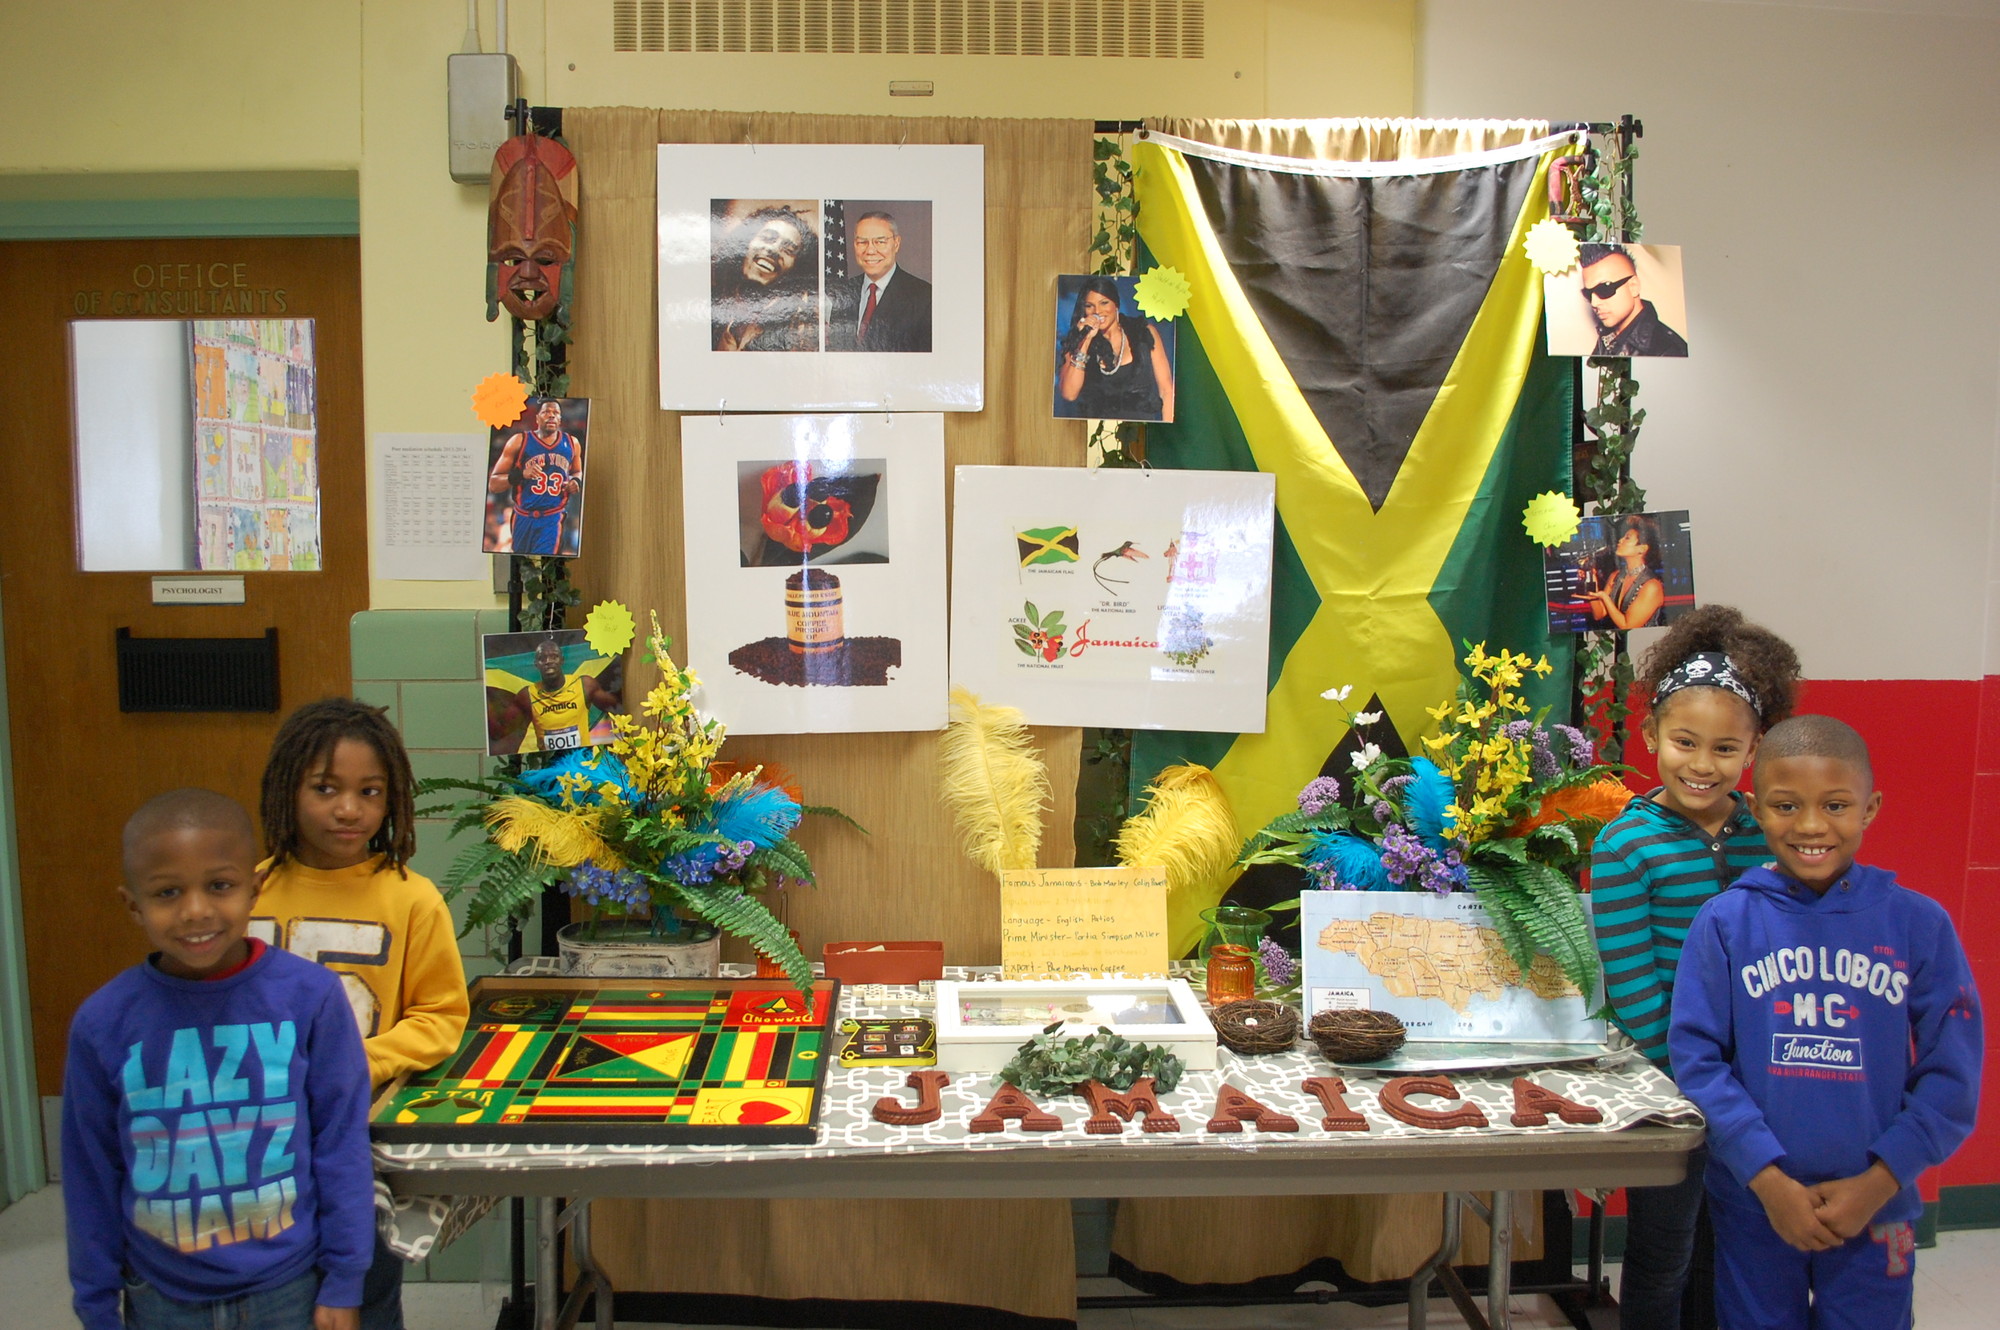 Celebrating Jamaica are Jordan James, Luke WIlliams, Justin James and Kennedy Hunter.